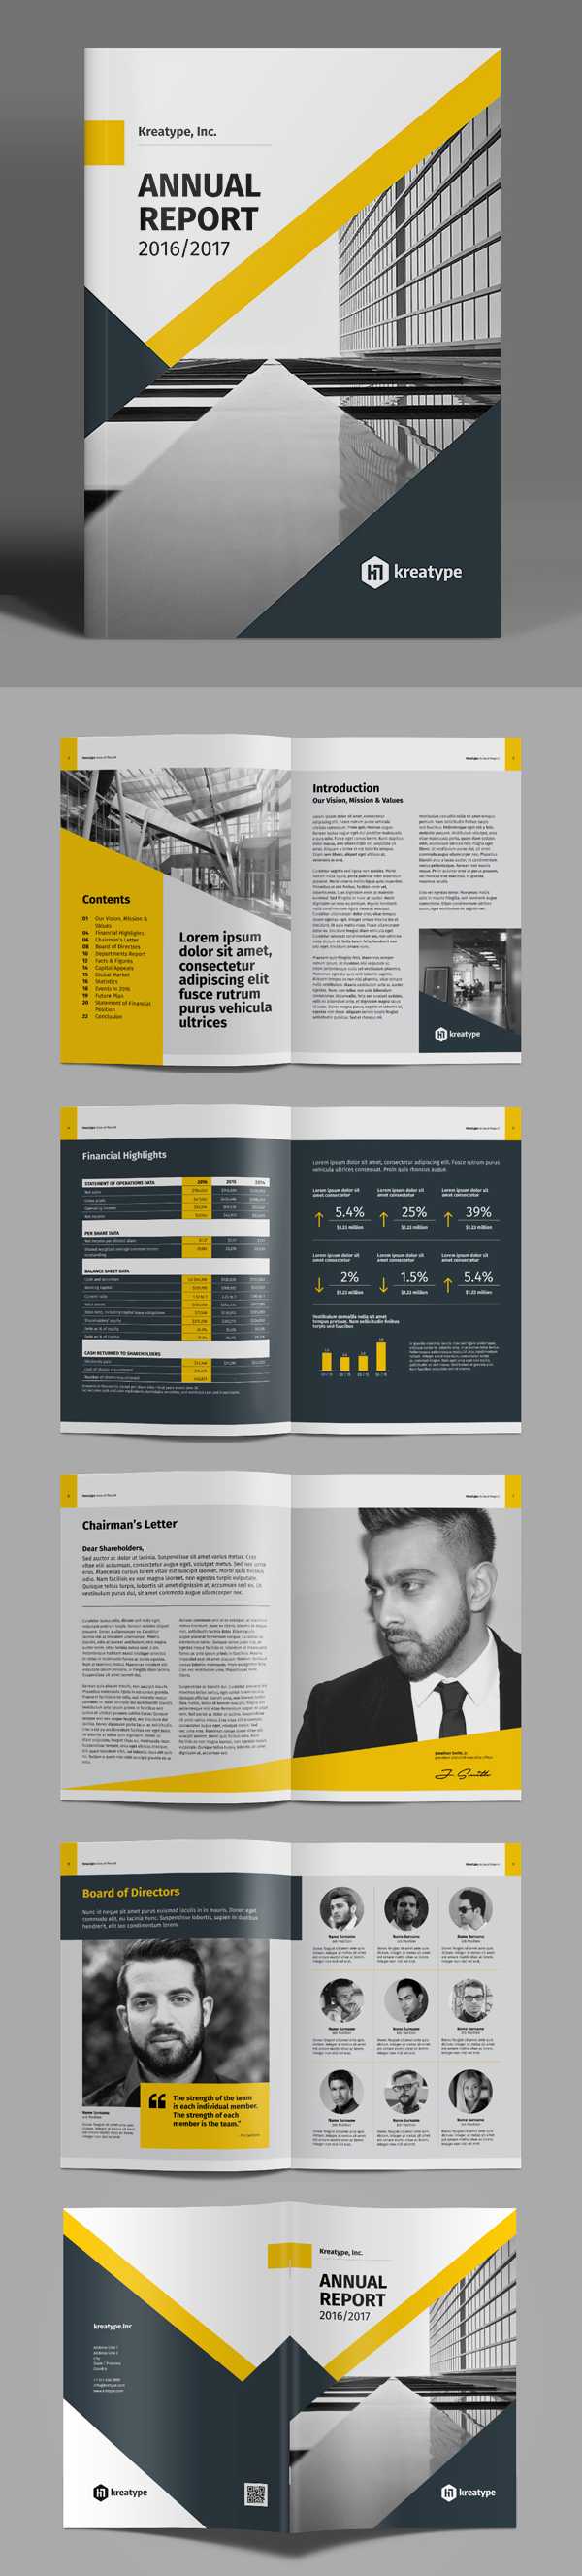 100 Professional Corporate Brochure Templates | Design Inside Chairman's Annual Report Template